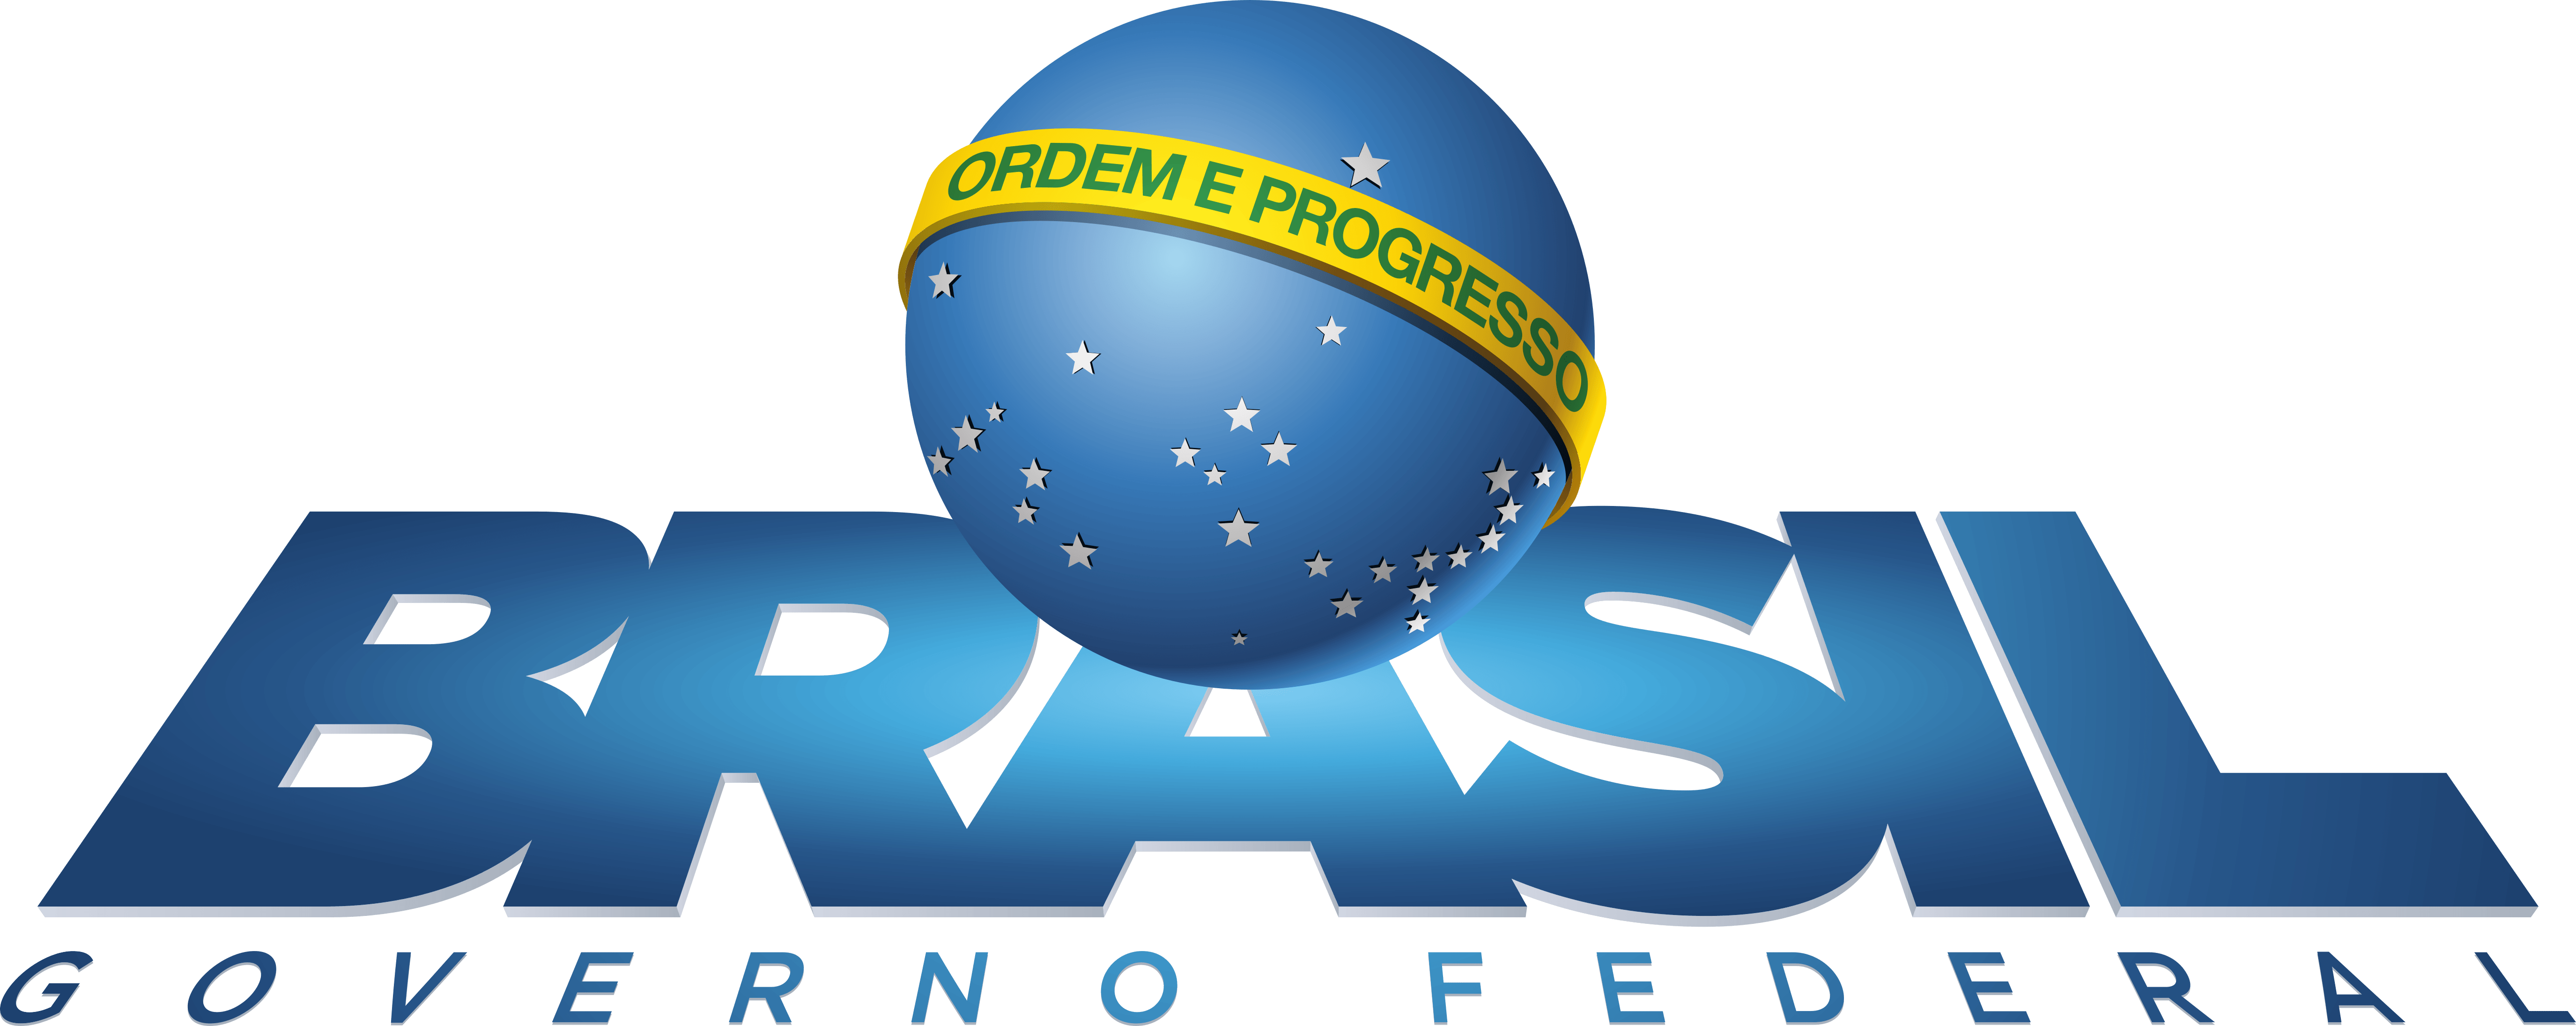 Brasil Logo - Governo Federal Logo Novo Temer Grande.png